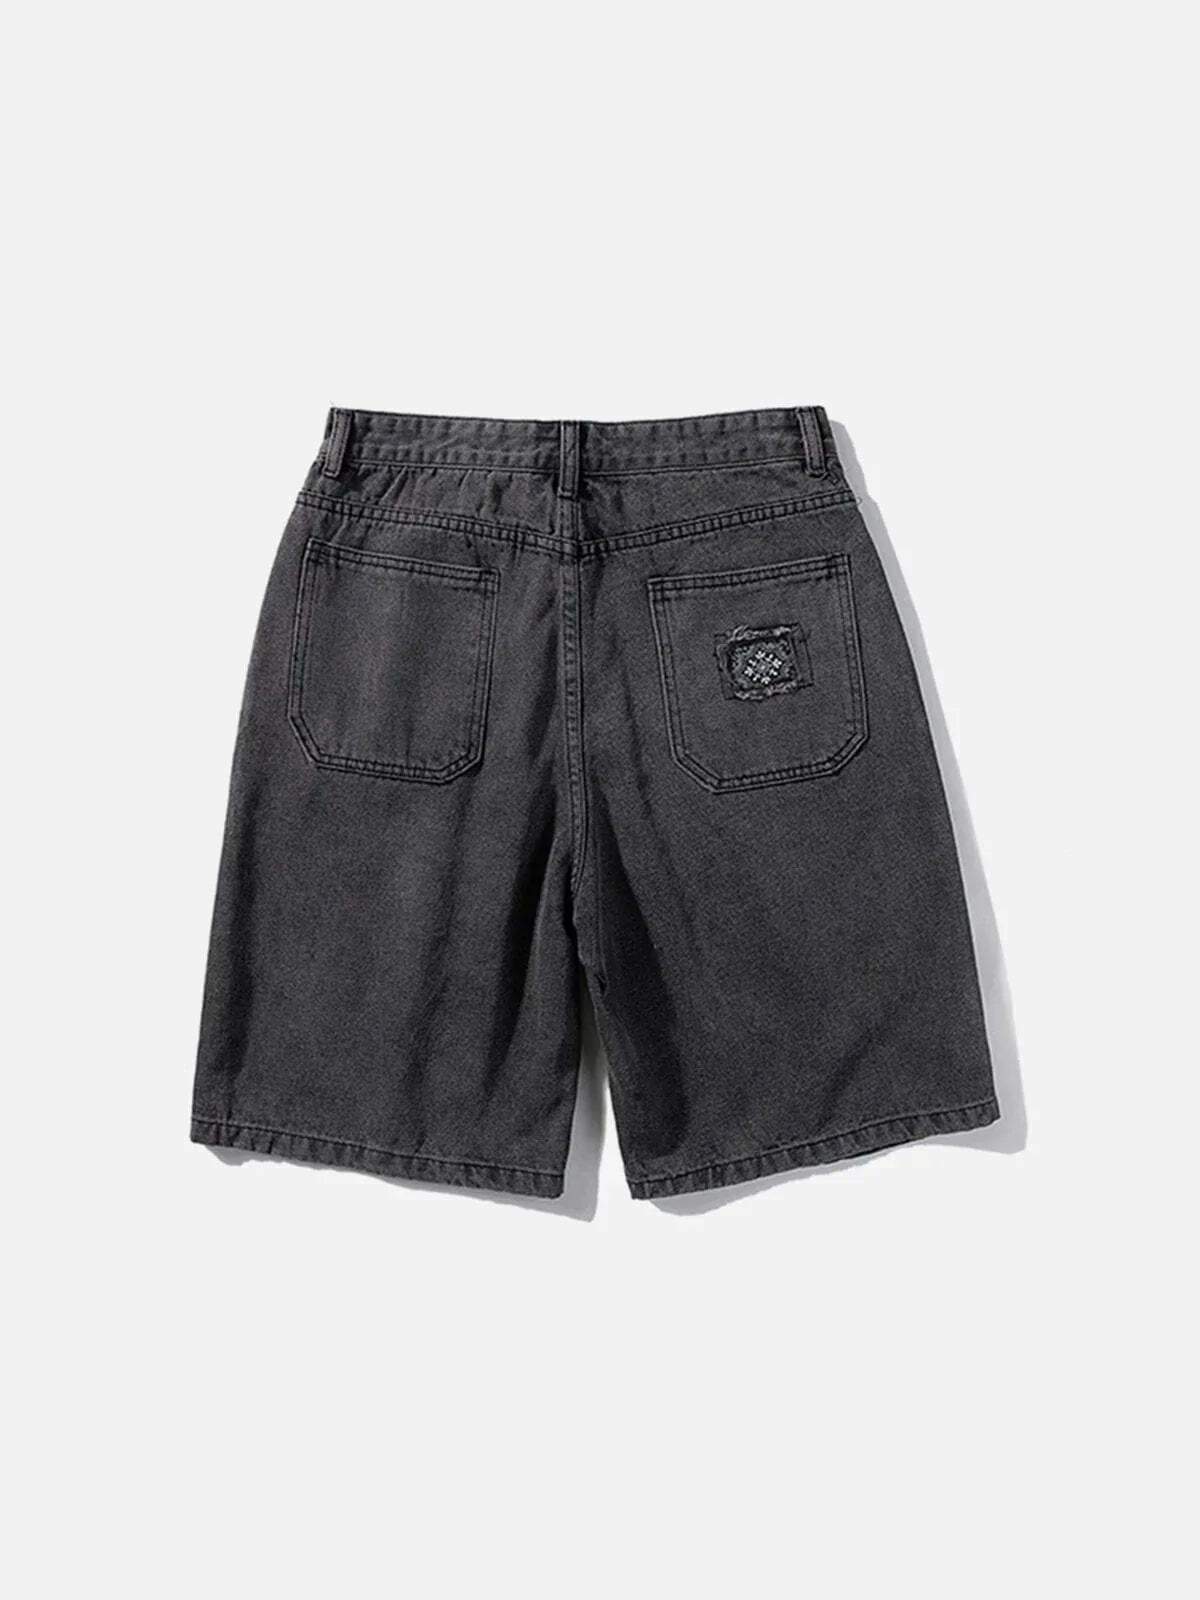 retro shredded denim shorts edgy streetwear staple 8990